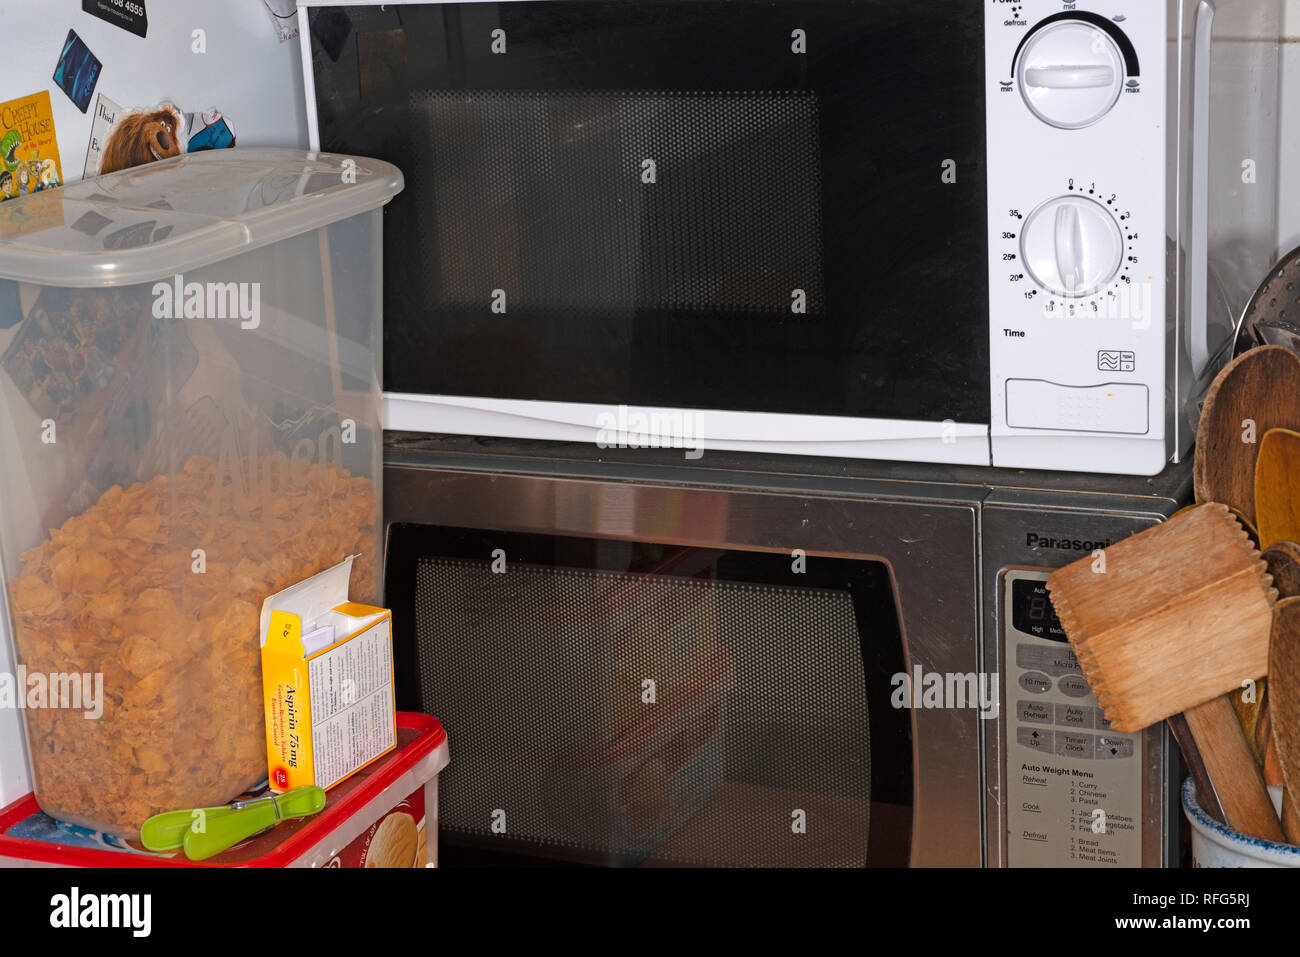 https://c8.alamy.com/comp/RFG5RJ/microwave-ovens-sitting-on-top-of-each-other-RFG5RJ.jpg